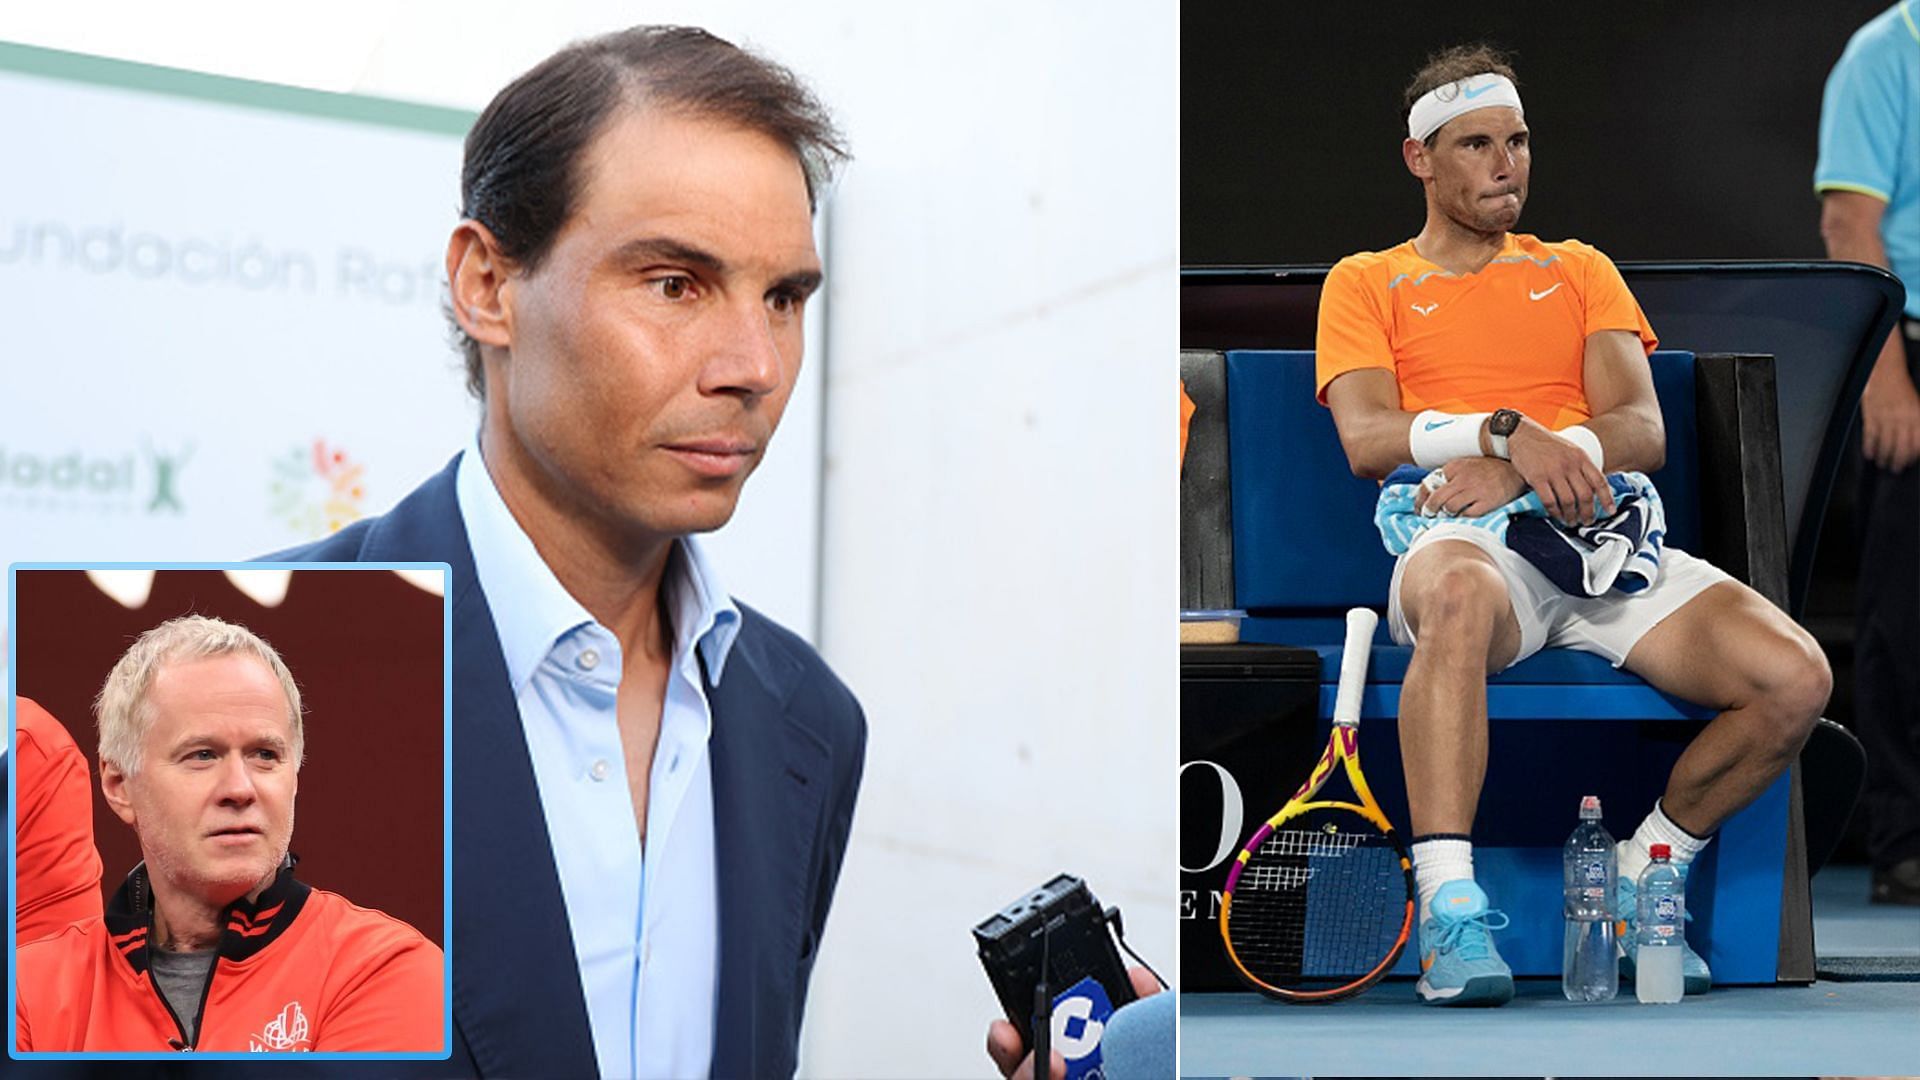 Patrick McEnroe casts doubt on Rafael Nadal